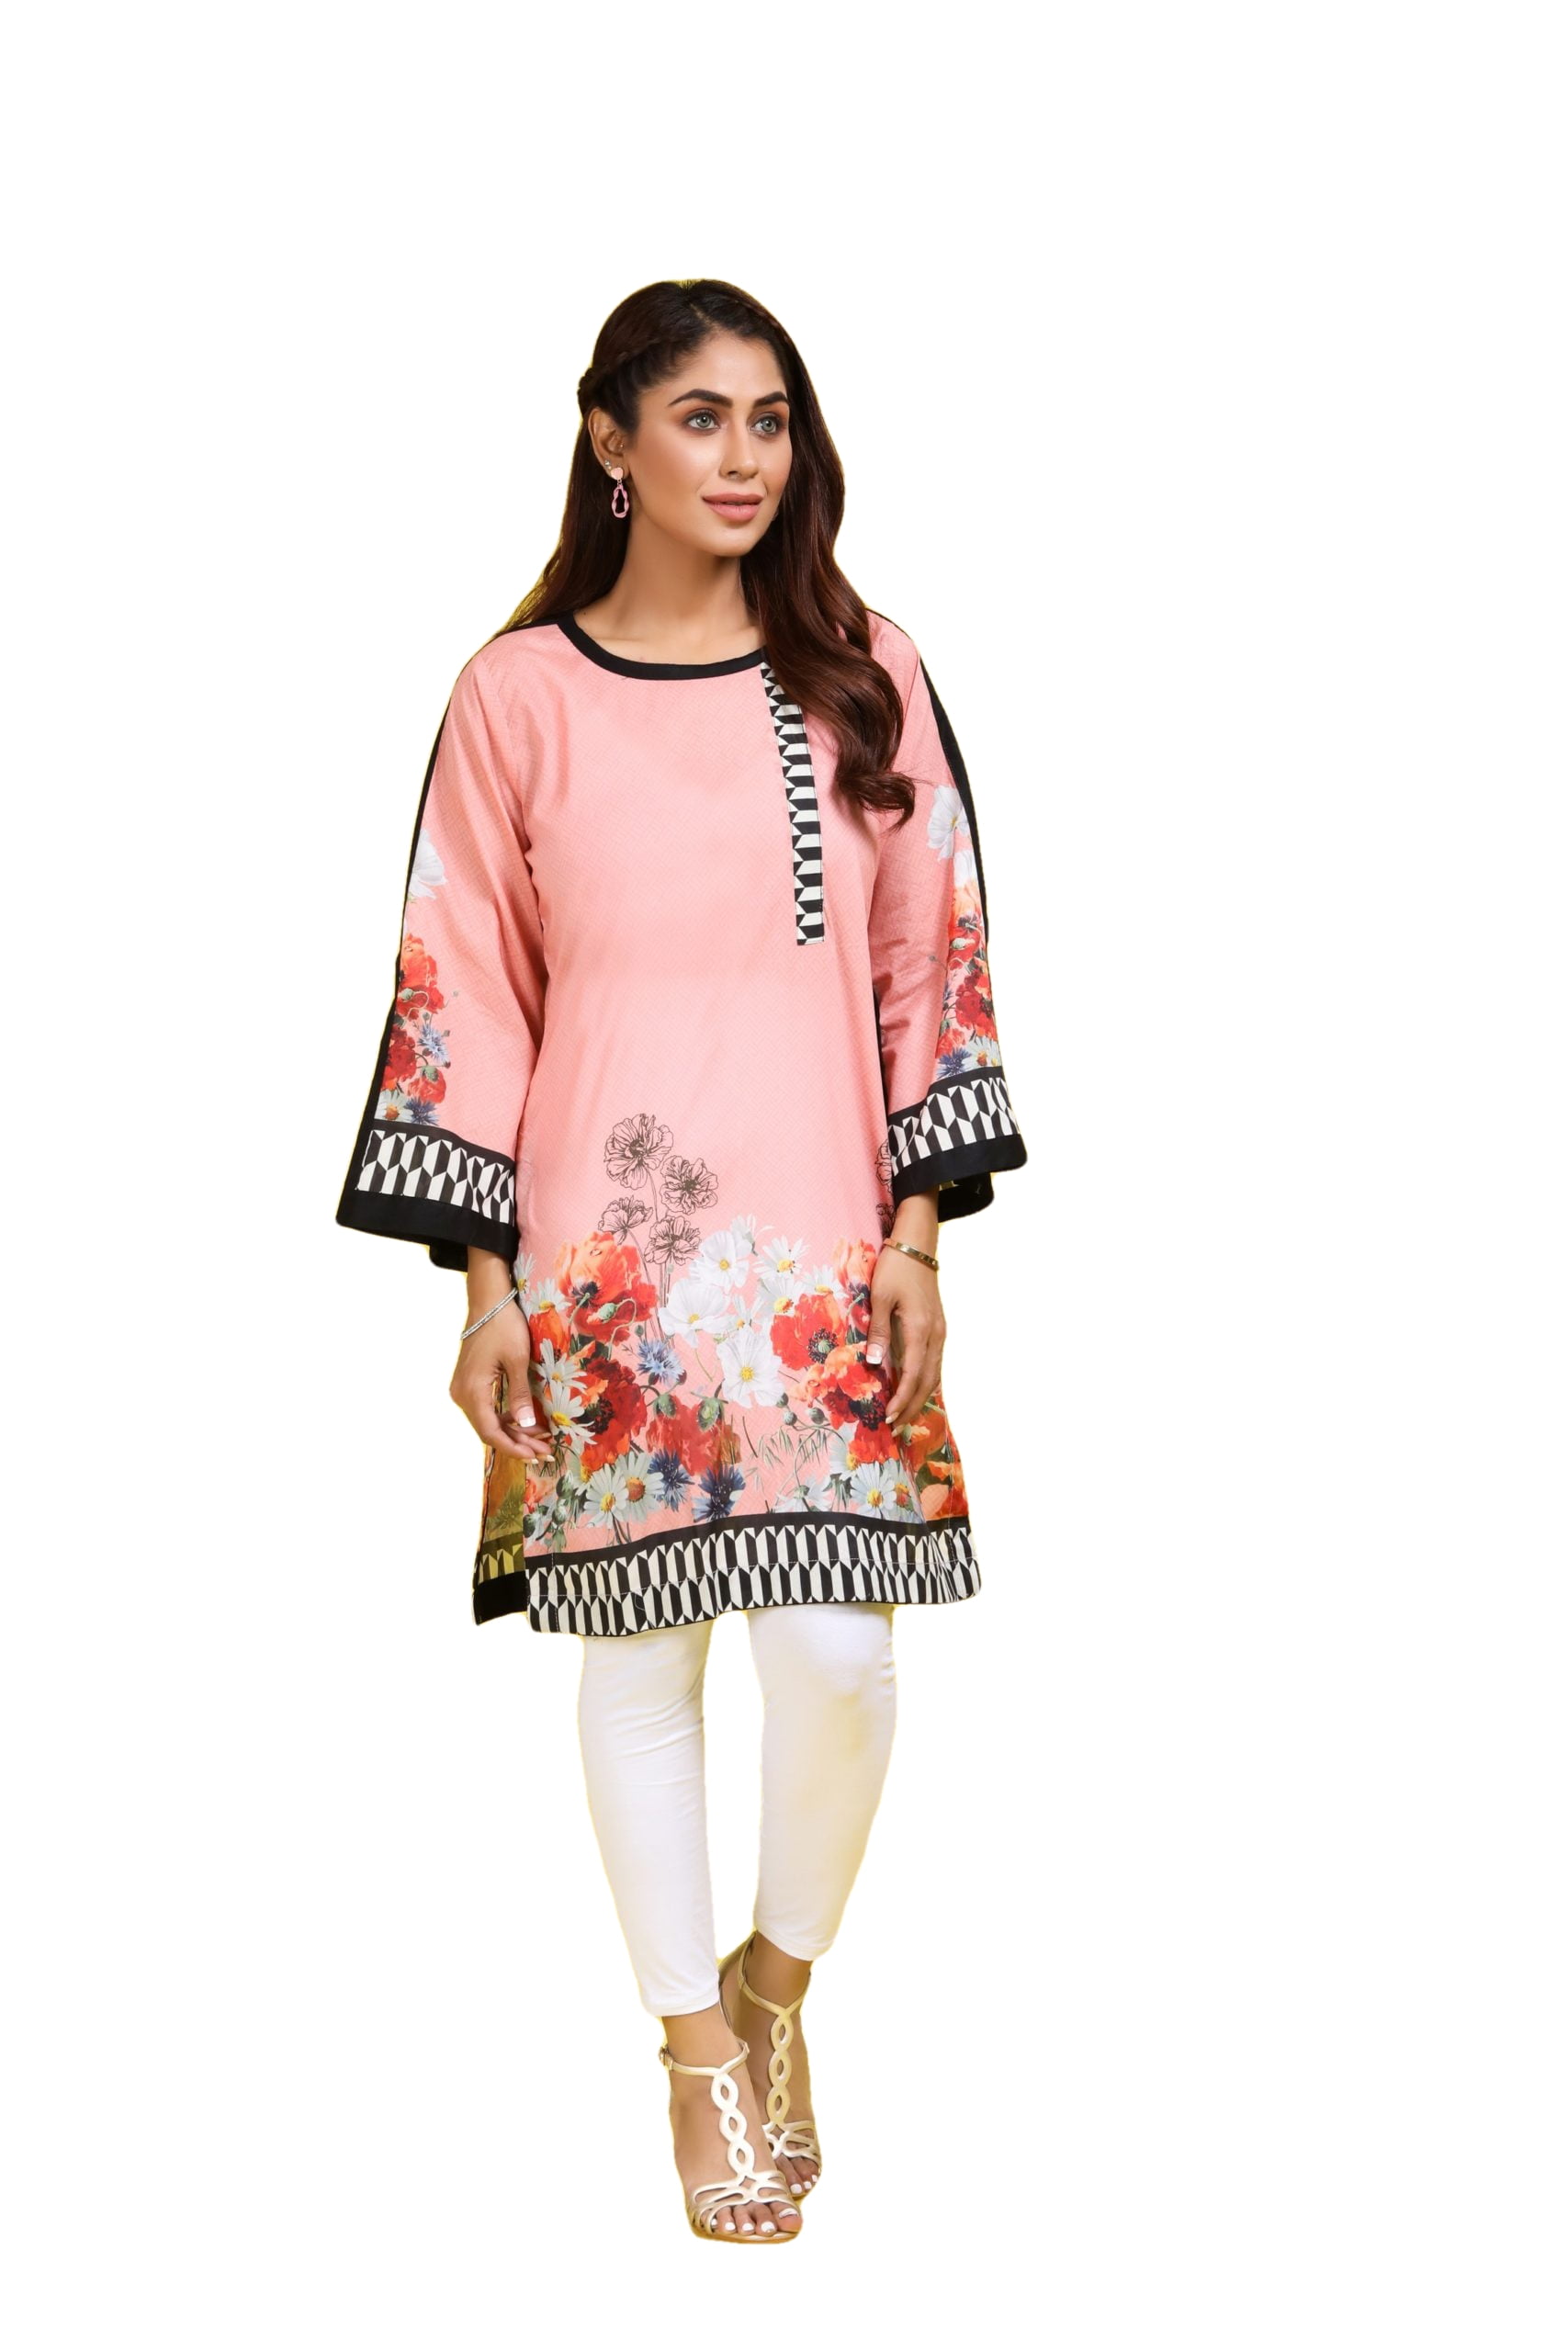 Bust40 " 100% Cotton Indian Kurti Vintage Look Top Bluse Hippy Kleid Tunika 